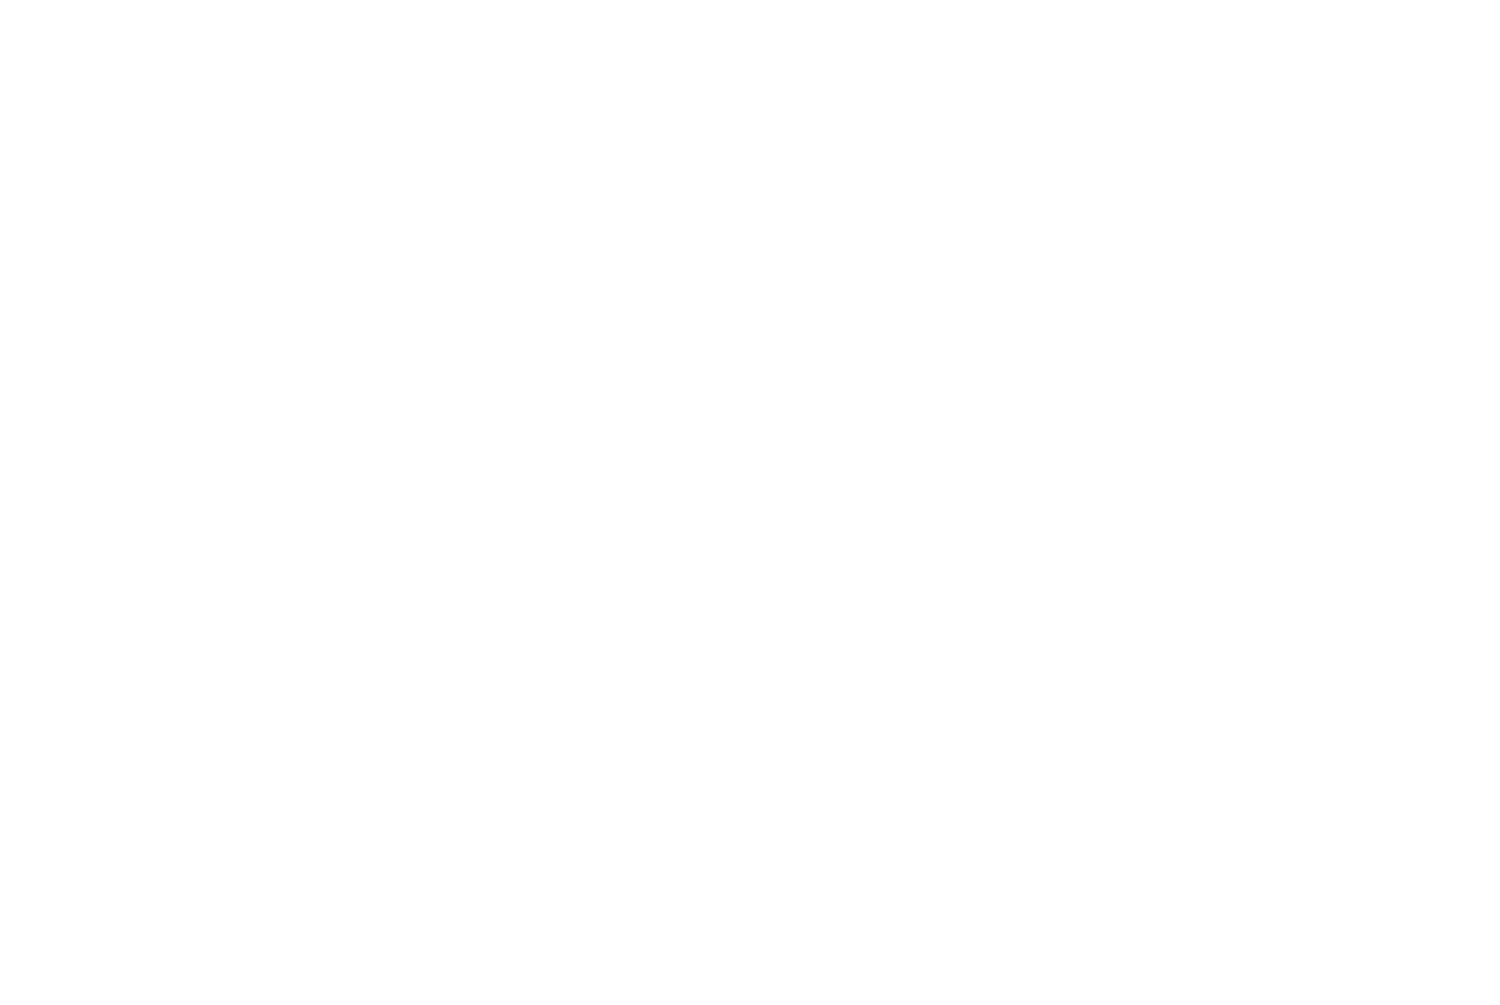 Southern Kentucky Choral Society